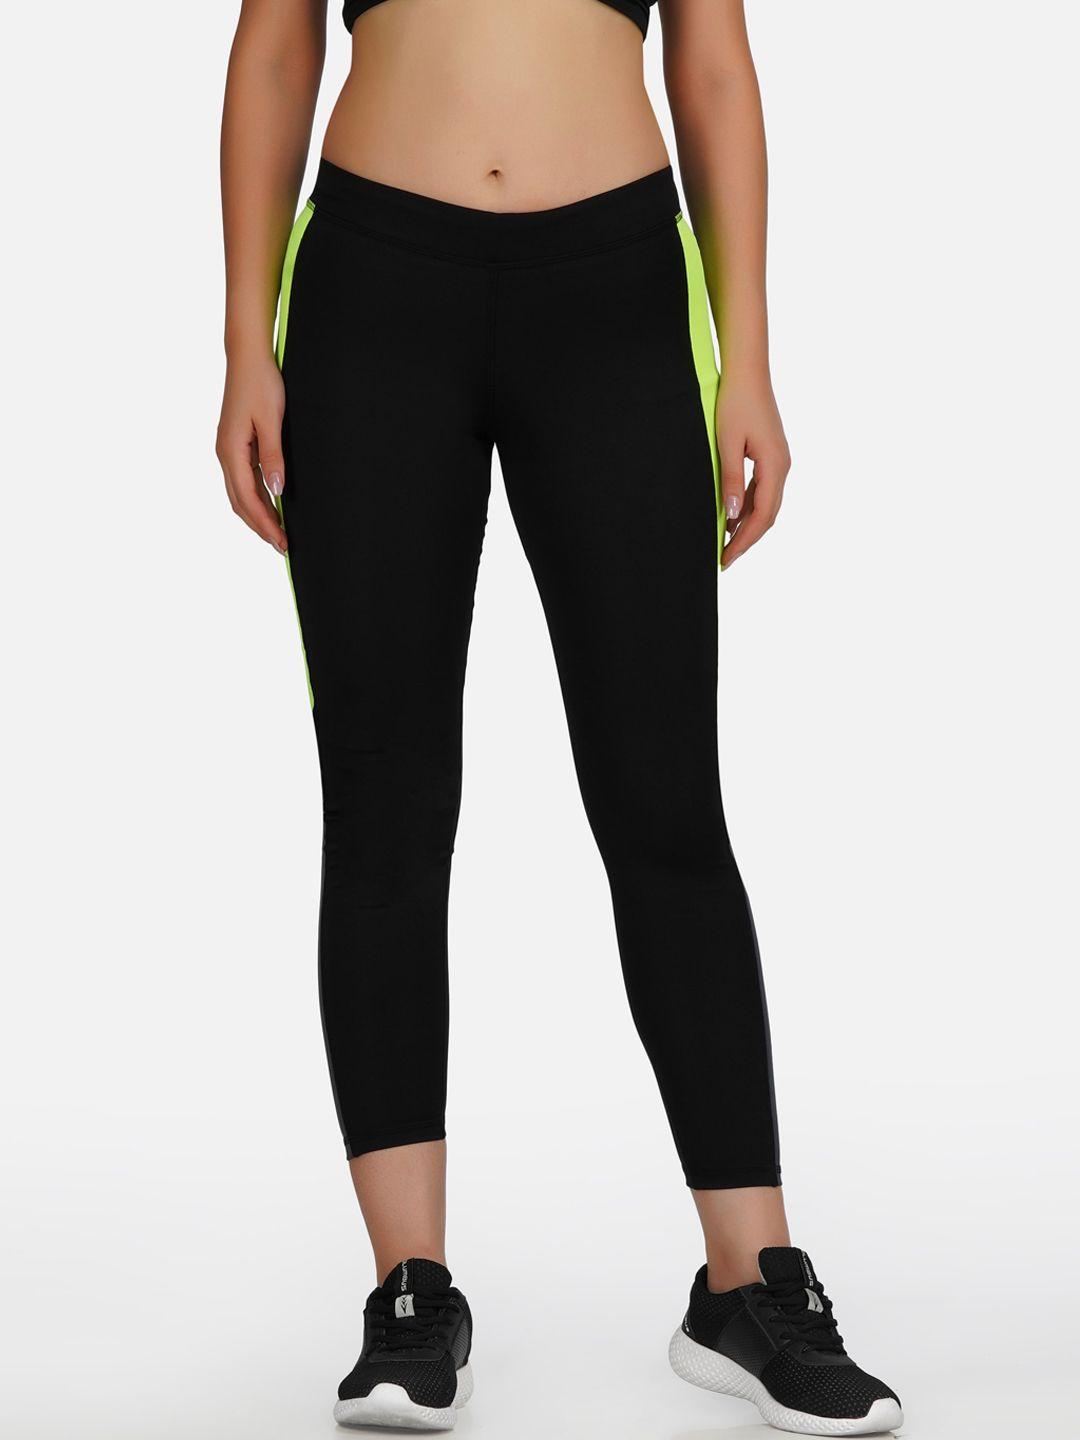 neu look fashion women black & florescent green colourblocked gym tights